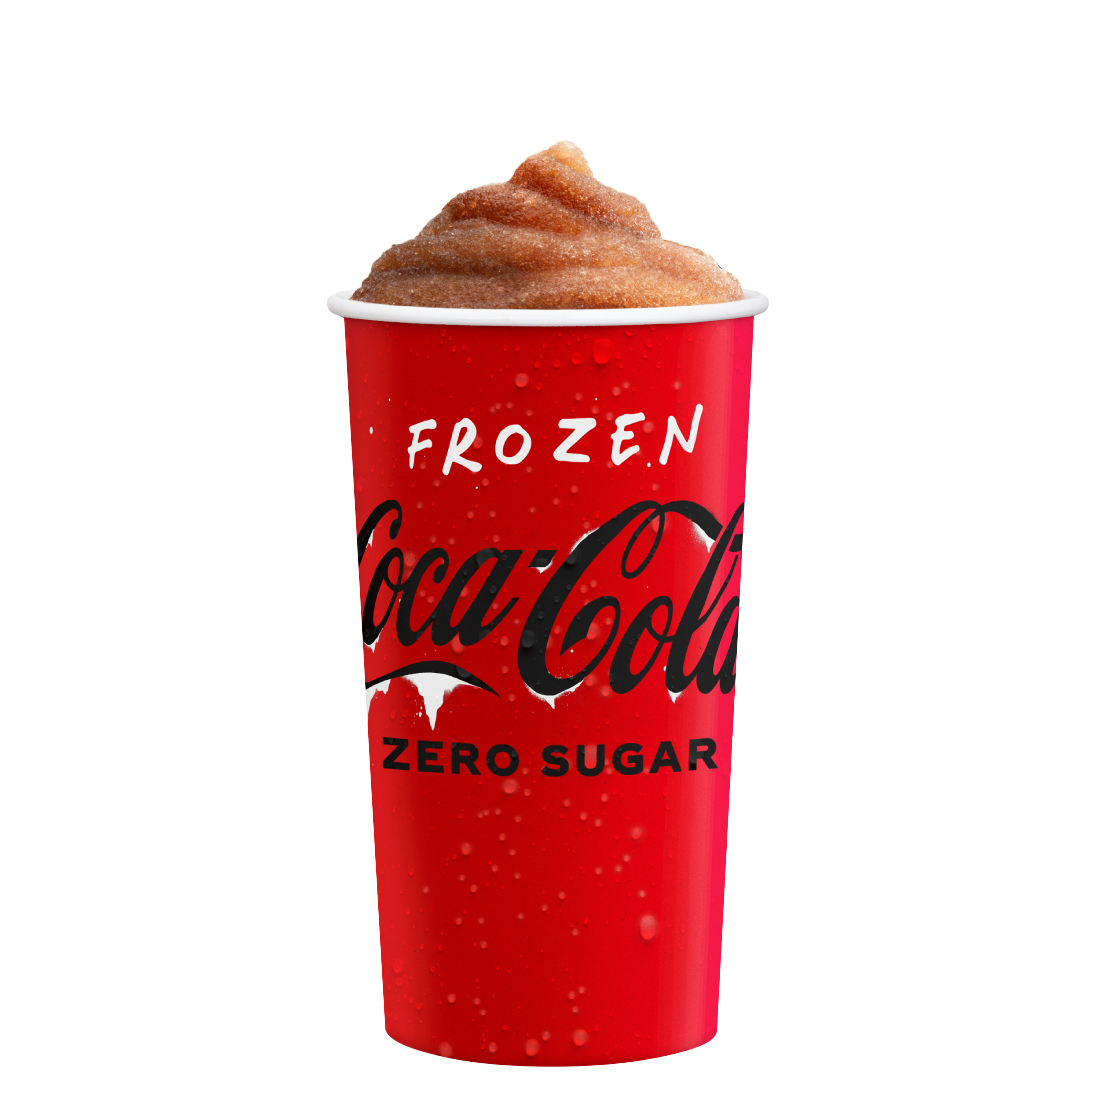 Frozen Coke Zero Sugar cup